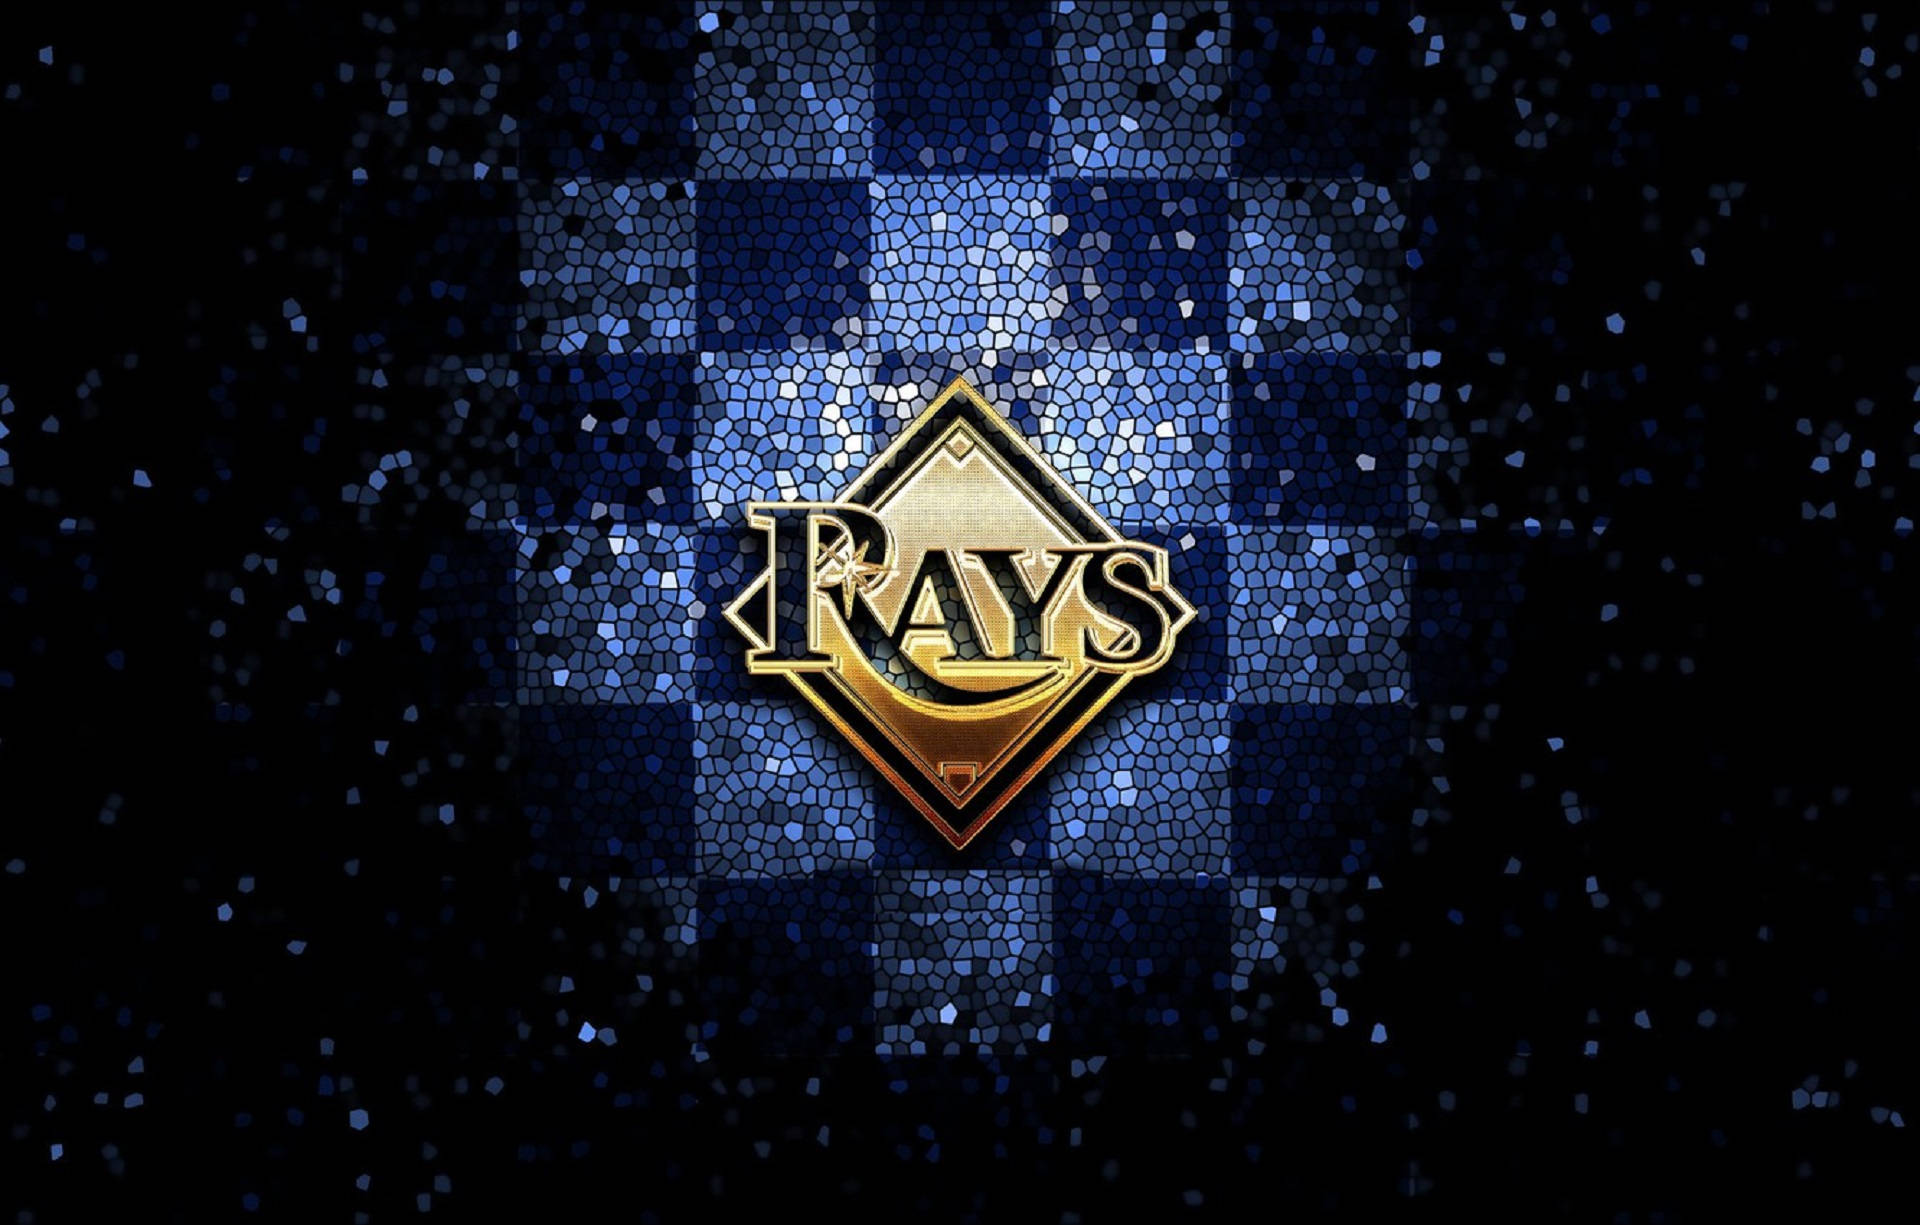 Tampa Bay Rays Gold Emblem